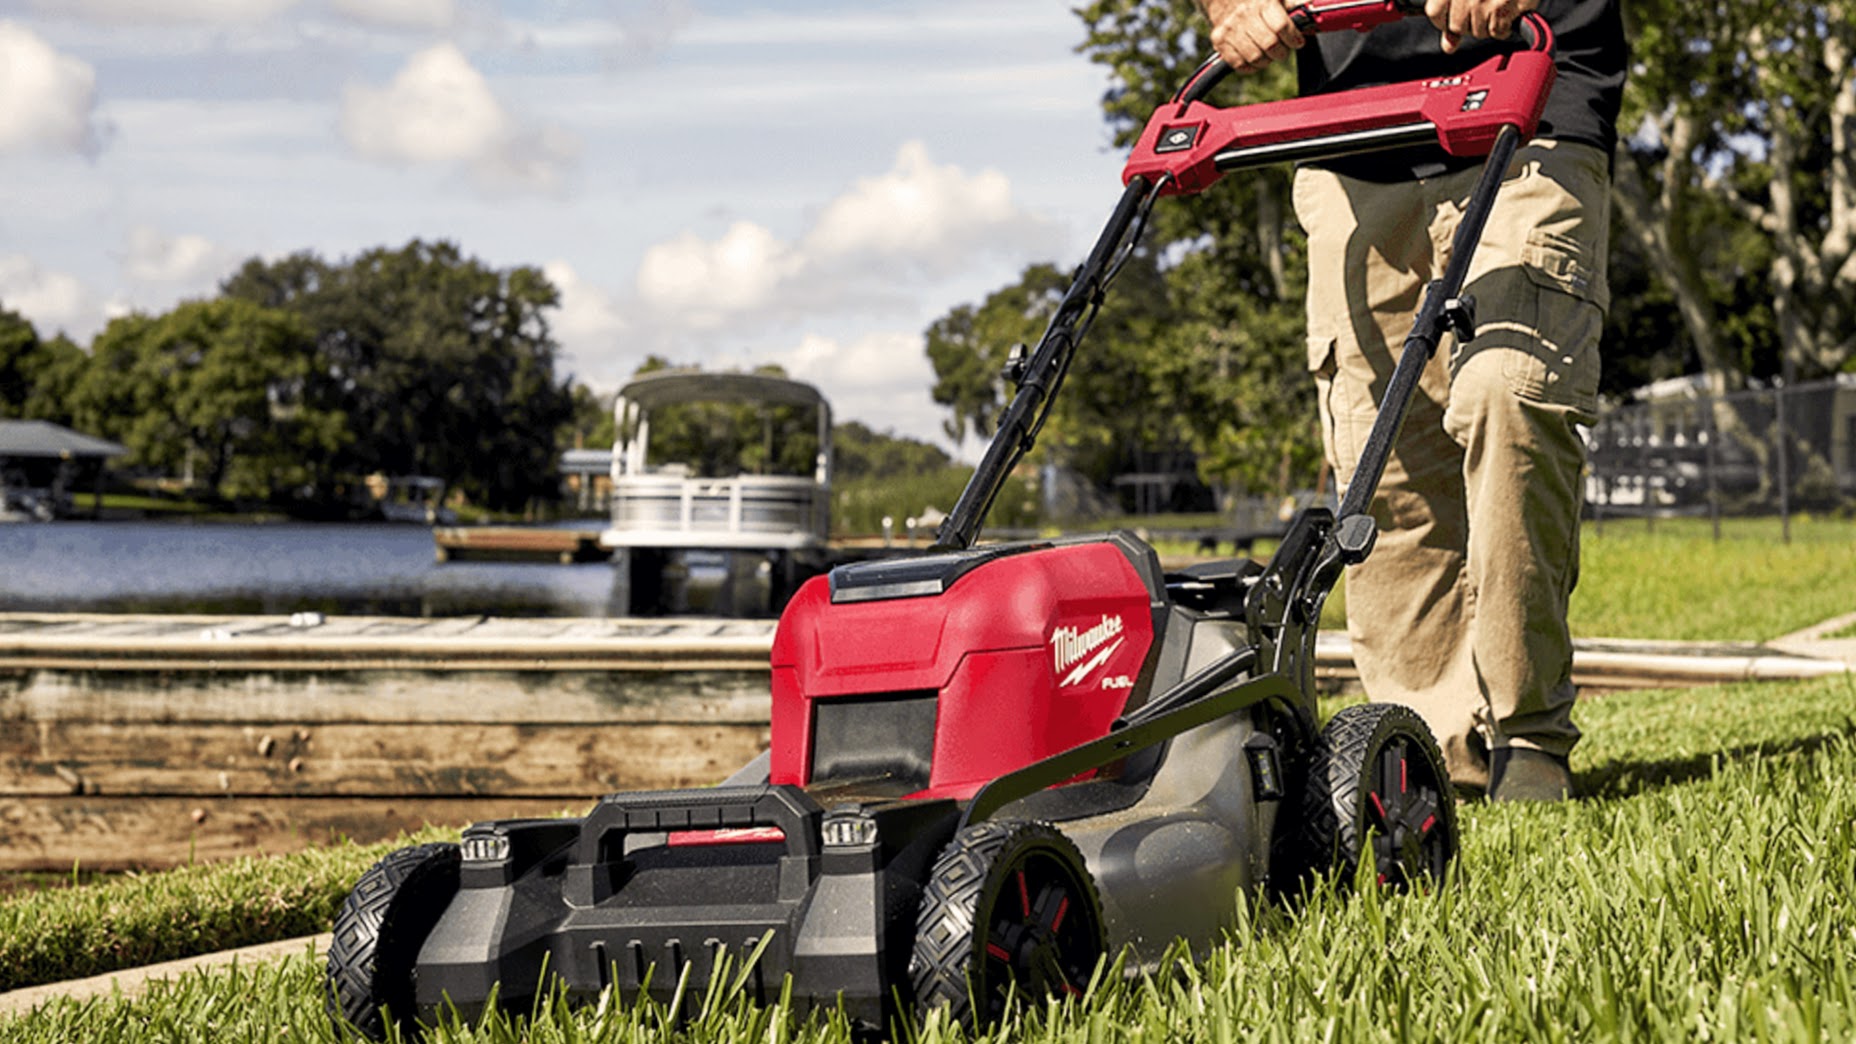 Best lawn mower deals, we list out the lawn mower sales